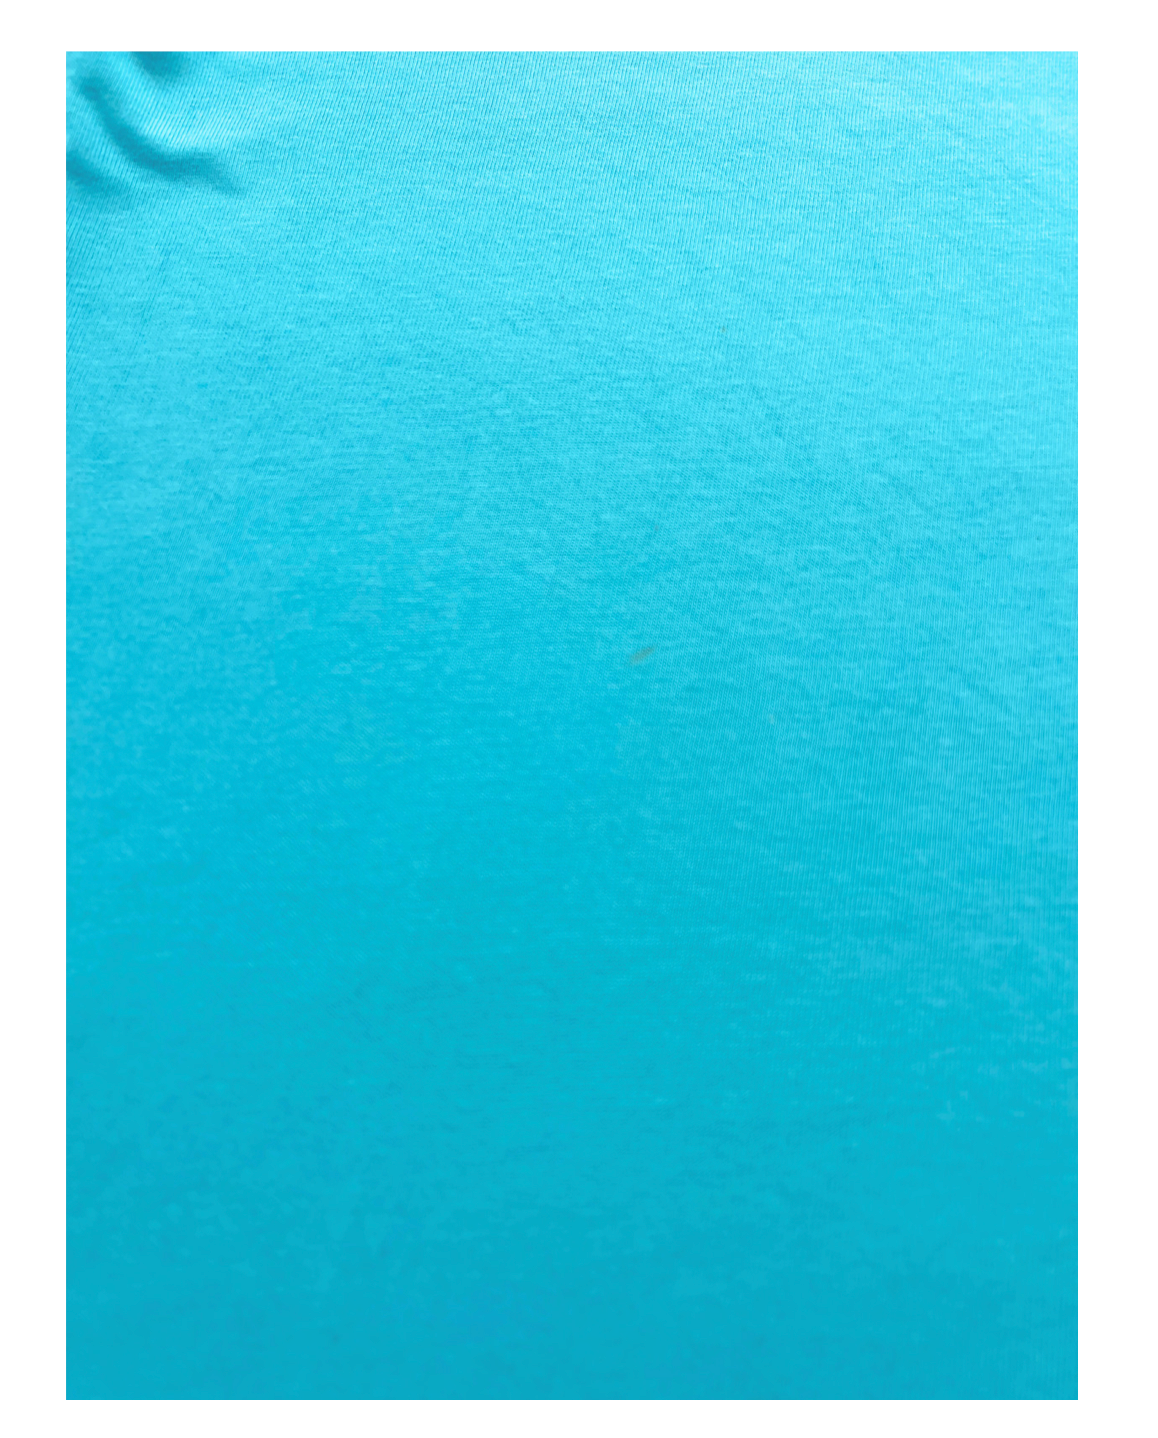 RALPH LAUREN - Tee shirt turquoise - 8 ans